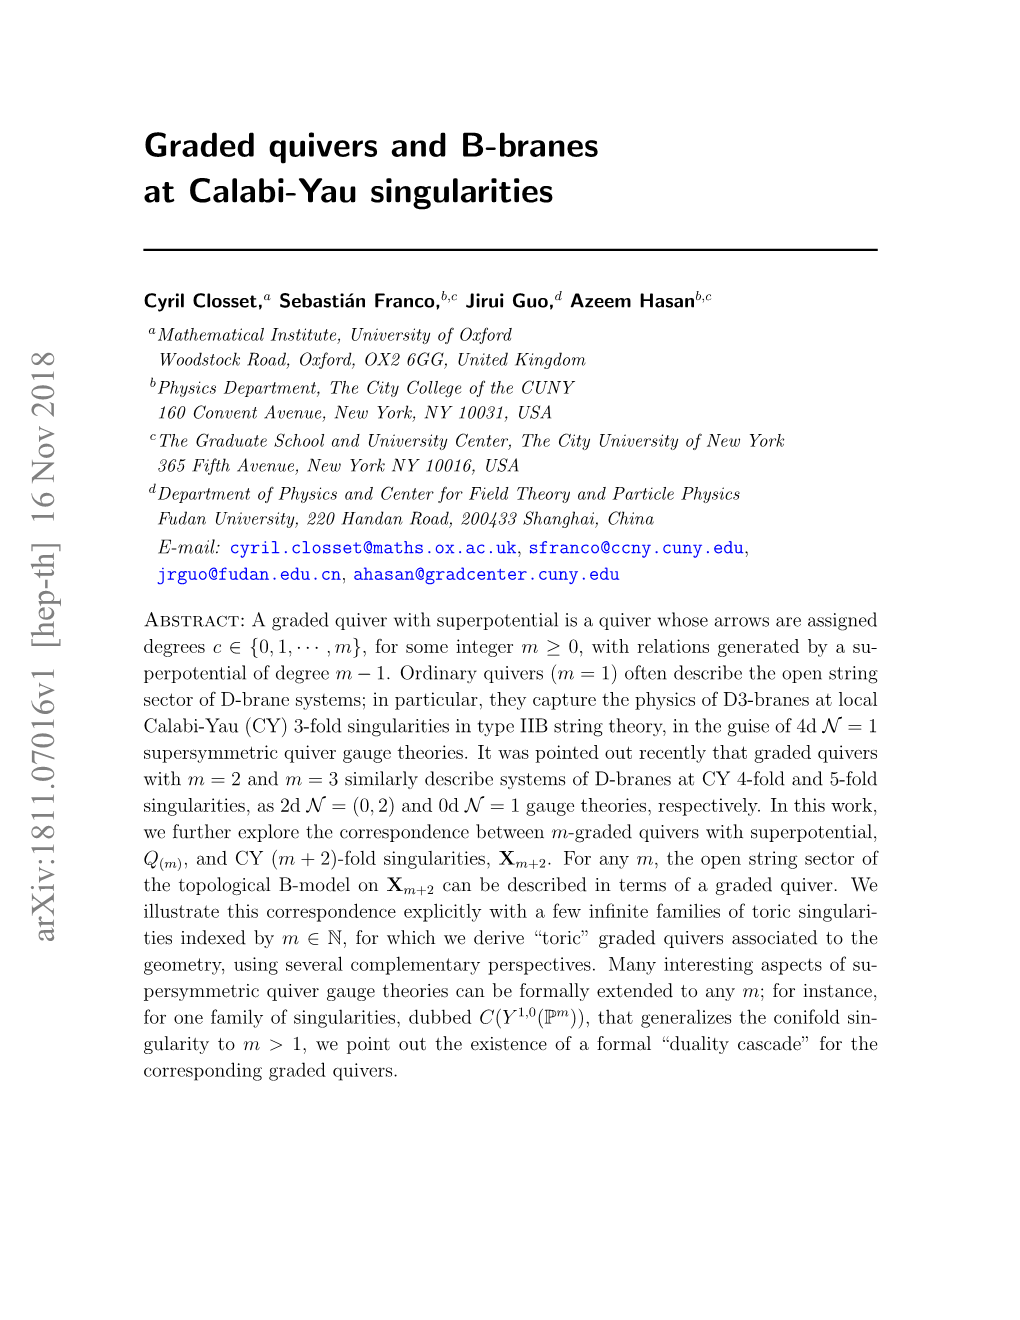 Graded Quivers and B-Branes at Calabi-Yau Singularities Arxiv